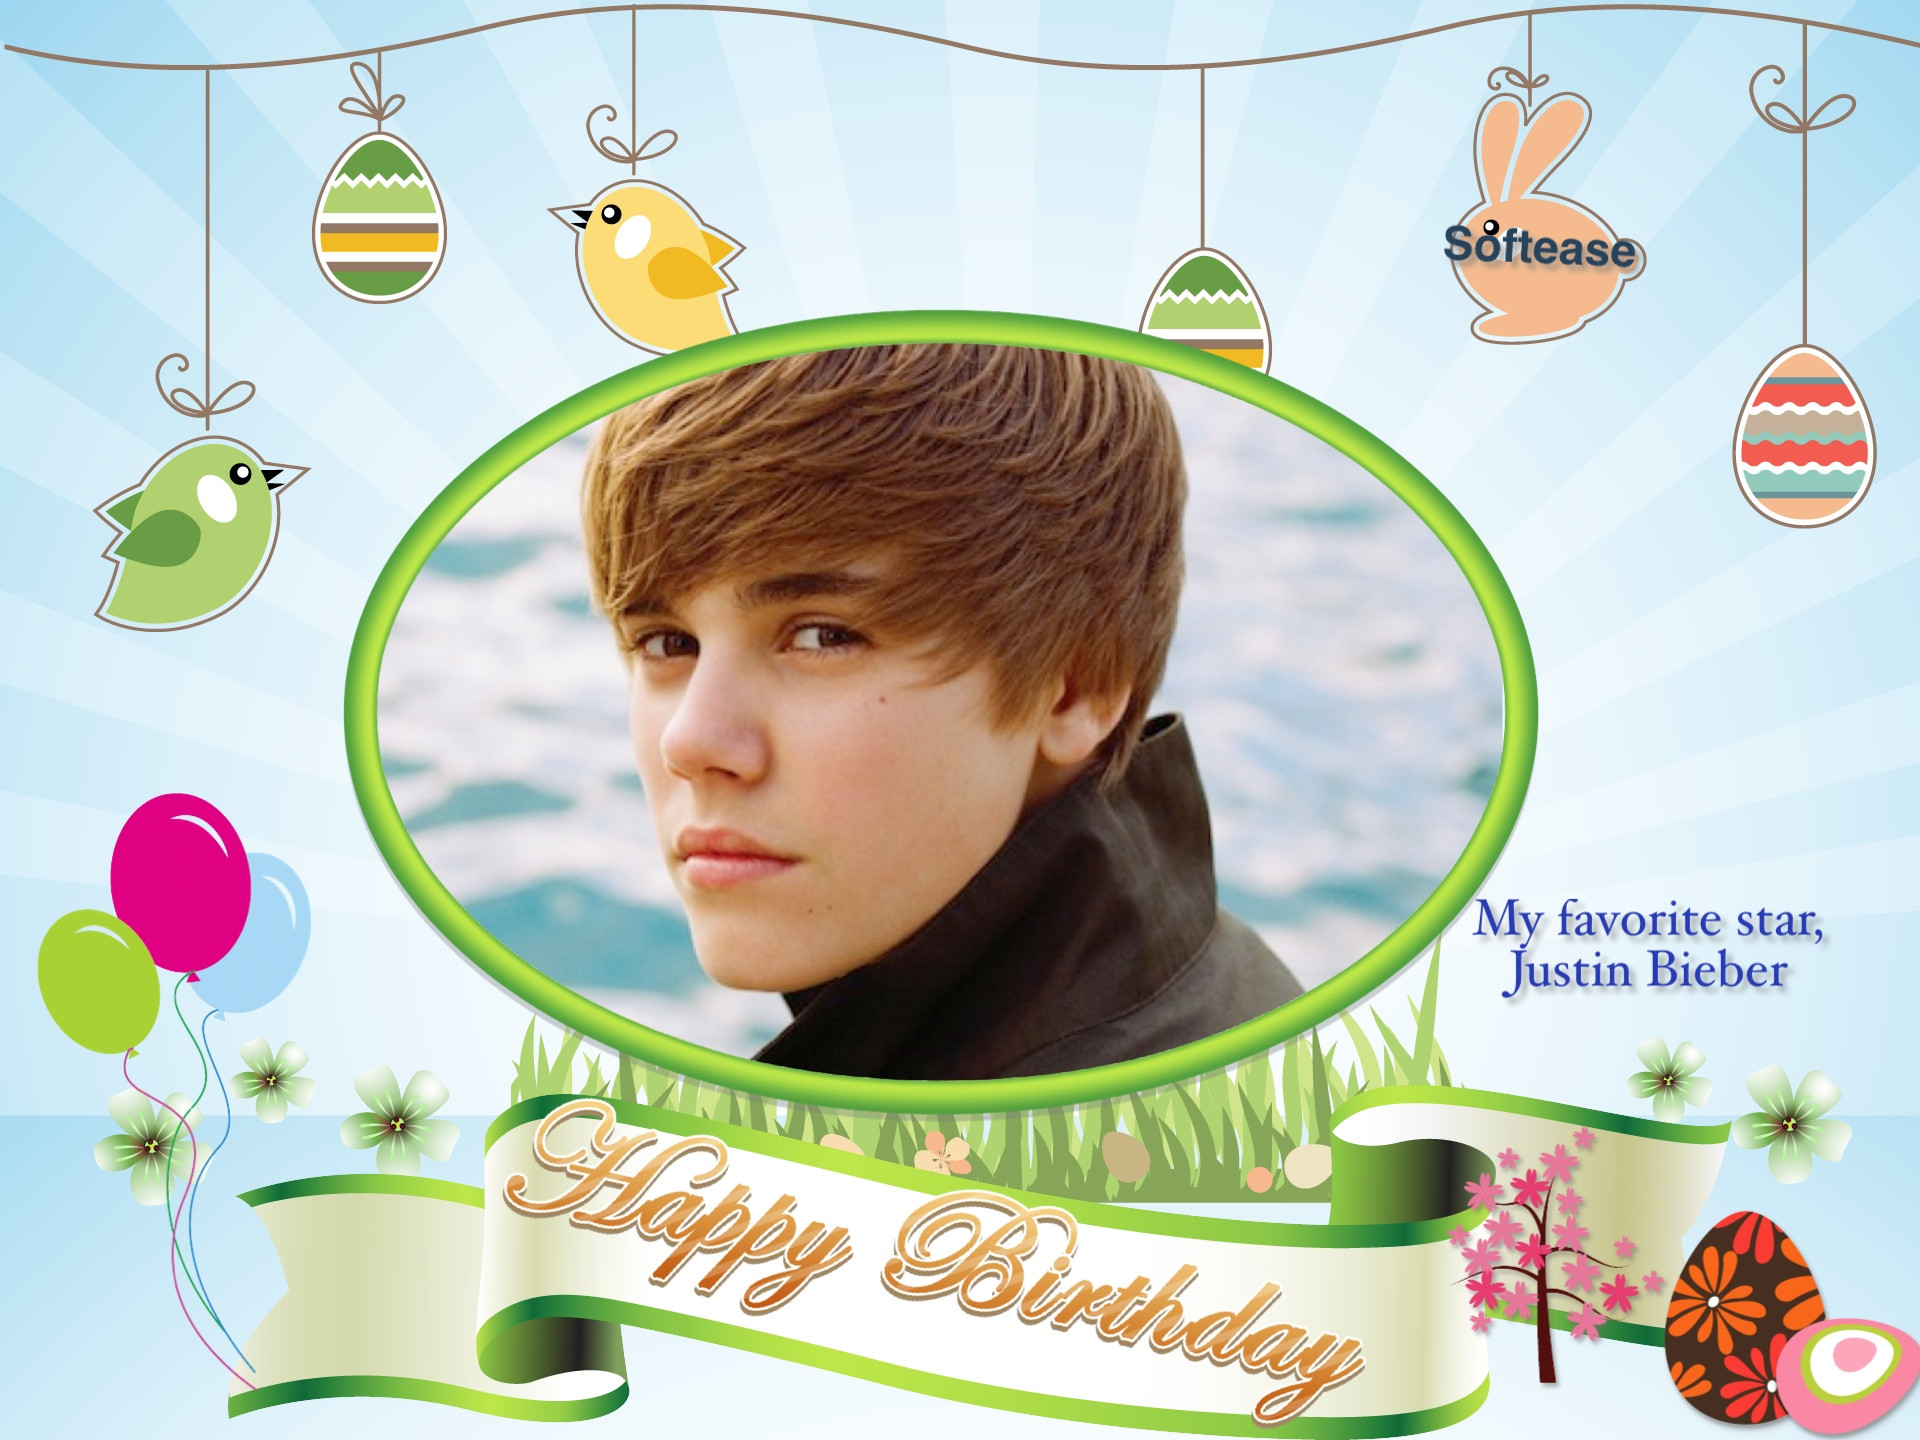 Justin Bieber Birthday Card
 Giant star – Justin Bieber His birthday is ing